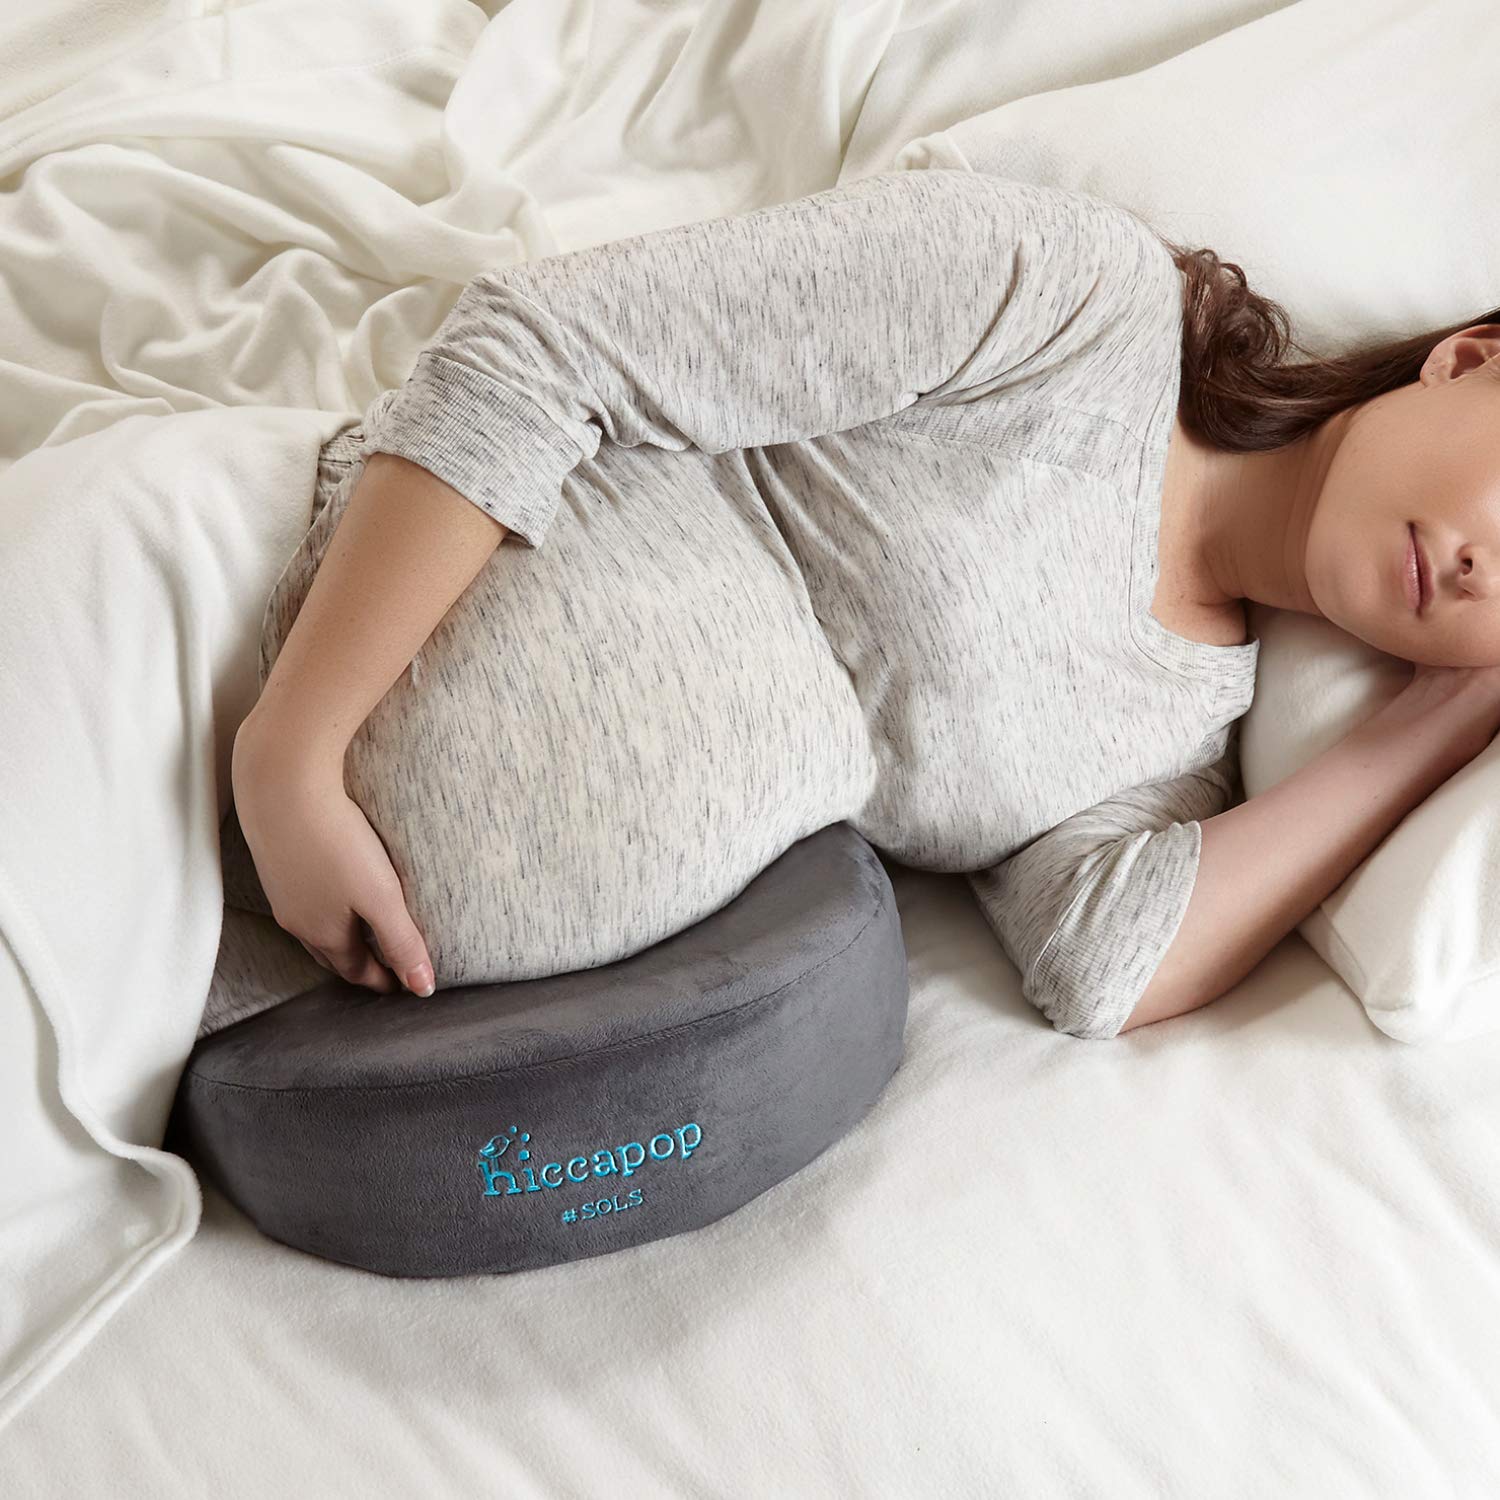 The 5 Best Pregnancy Pillows For Australian Mums